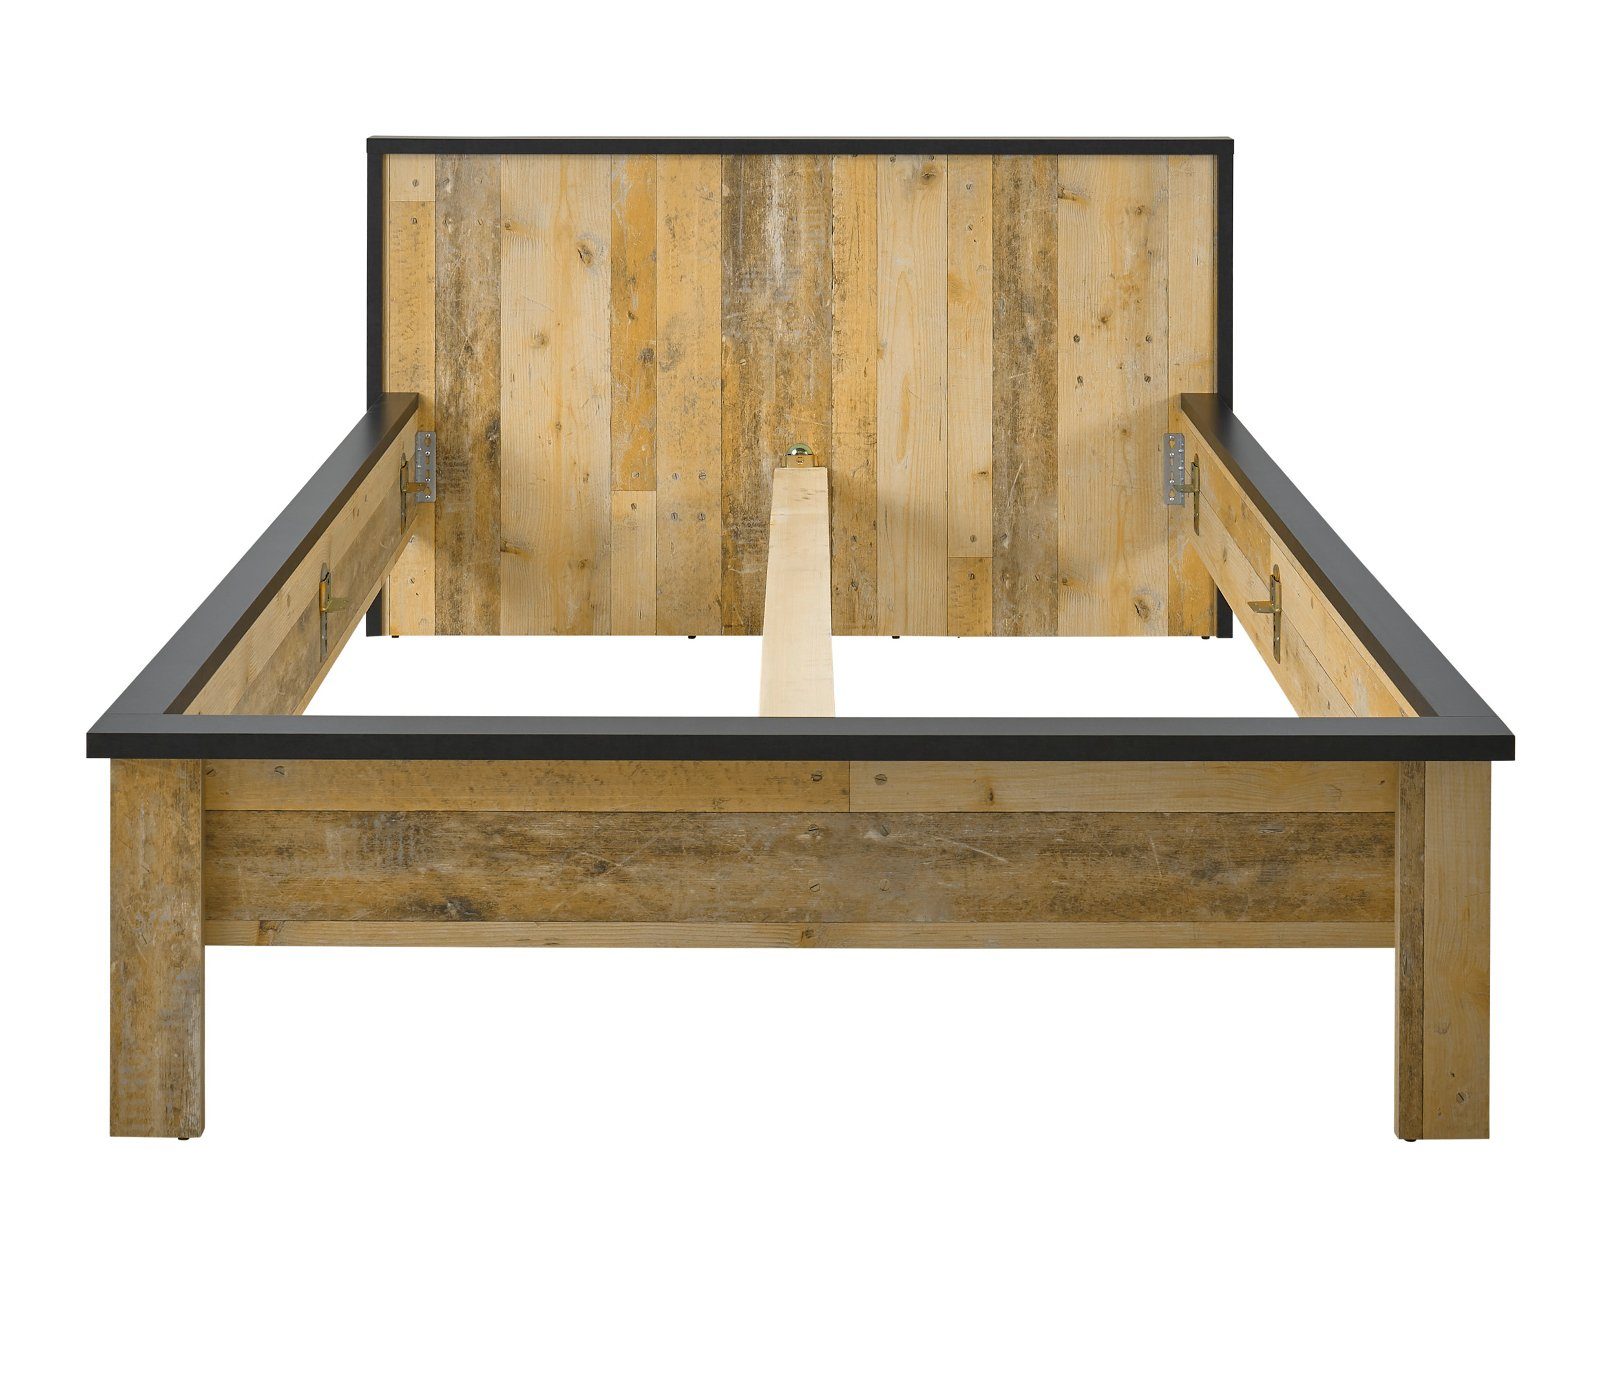 Used Stove, 140 3-teilig, (in cm), Wood, Furn.Design x 200 Schlafzimmer-Set Soft-Close-Funktion